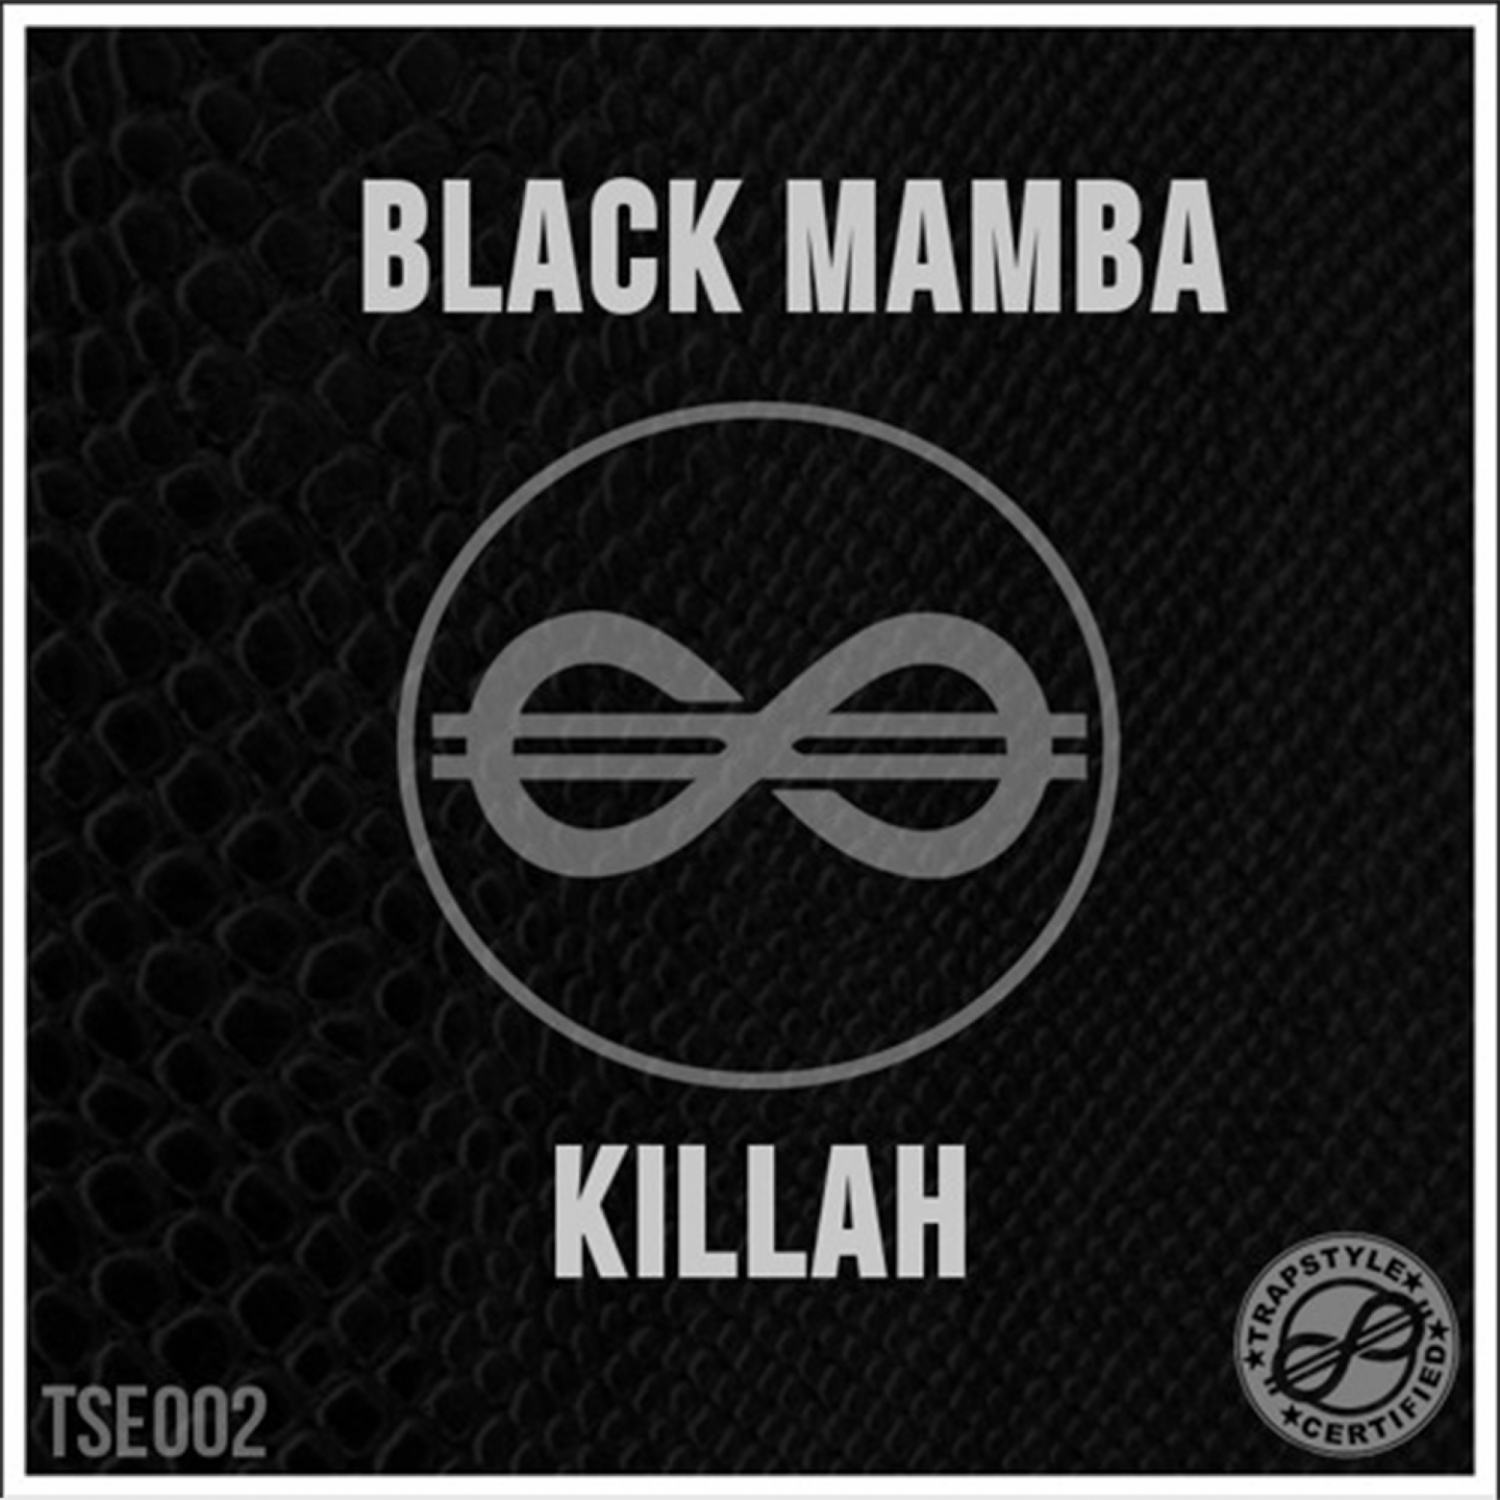 Black Mamba - Killah, Black Mamba - Killah (Original Mix), Black Mamba - .....